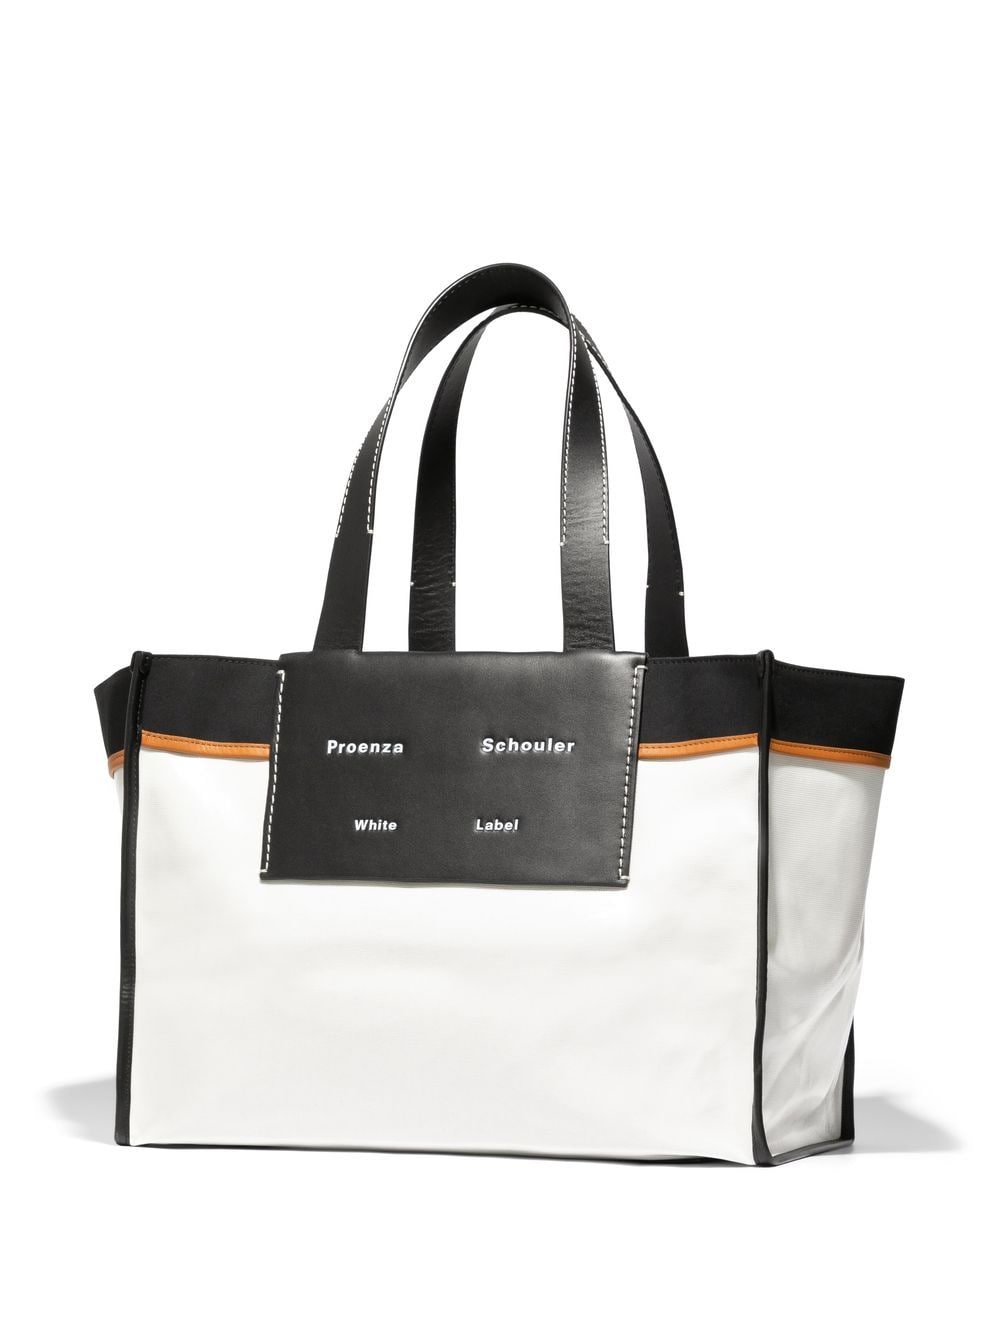 PROENZA SCHOULER WHITE LABEL Accordion color-block leather shoulder bag